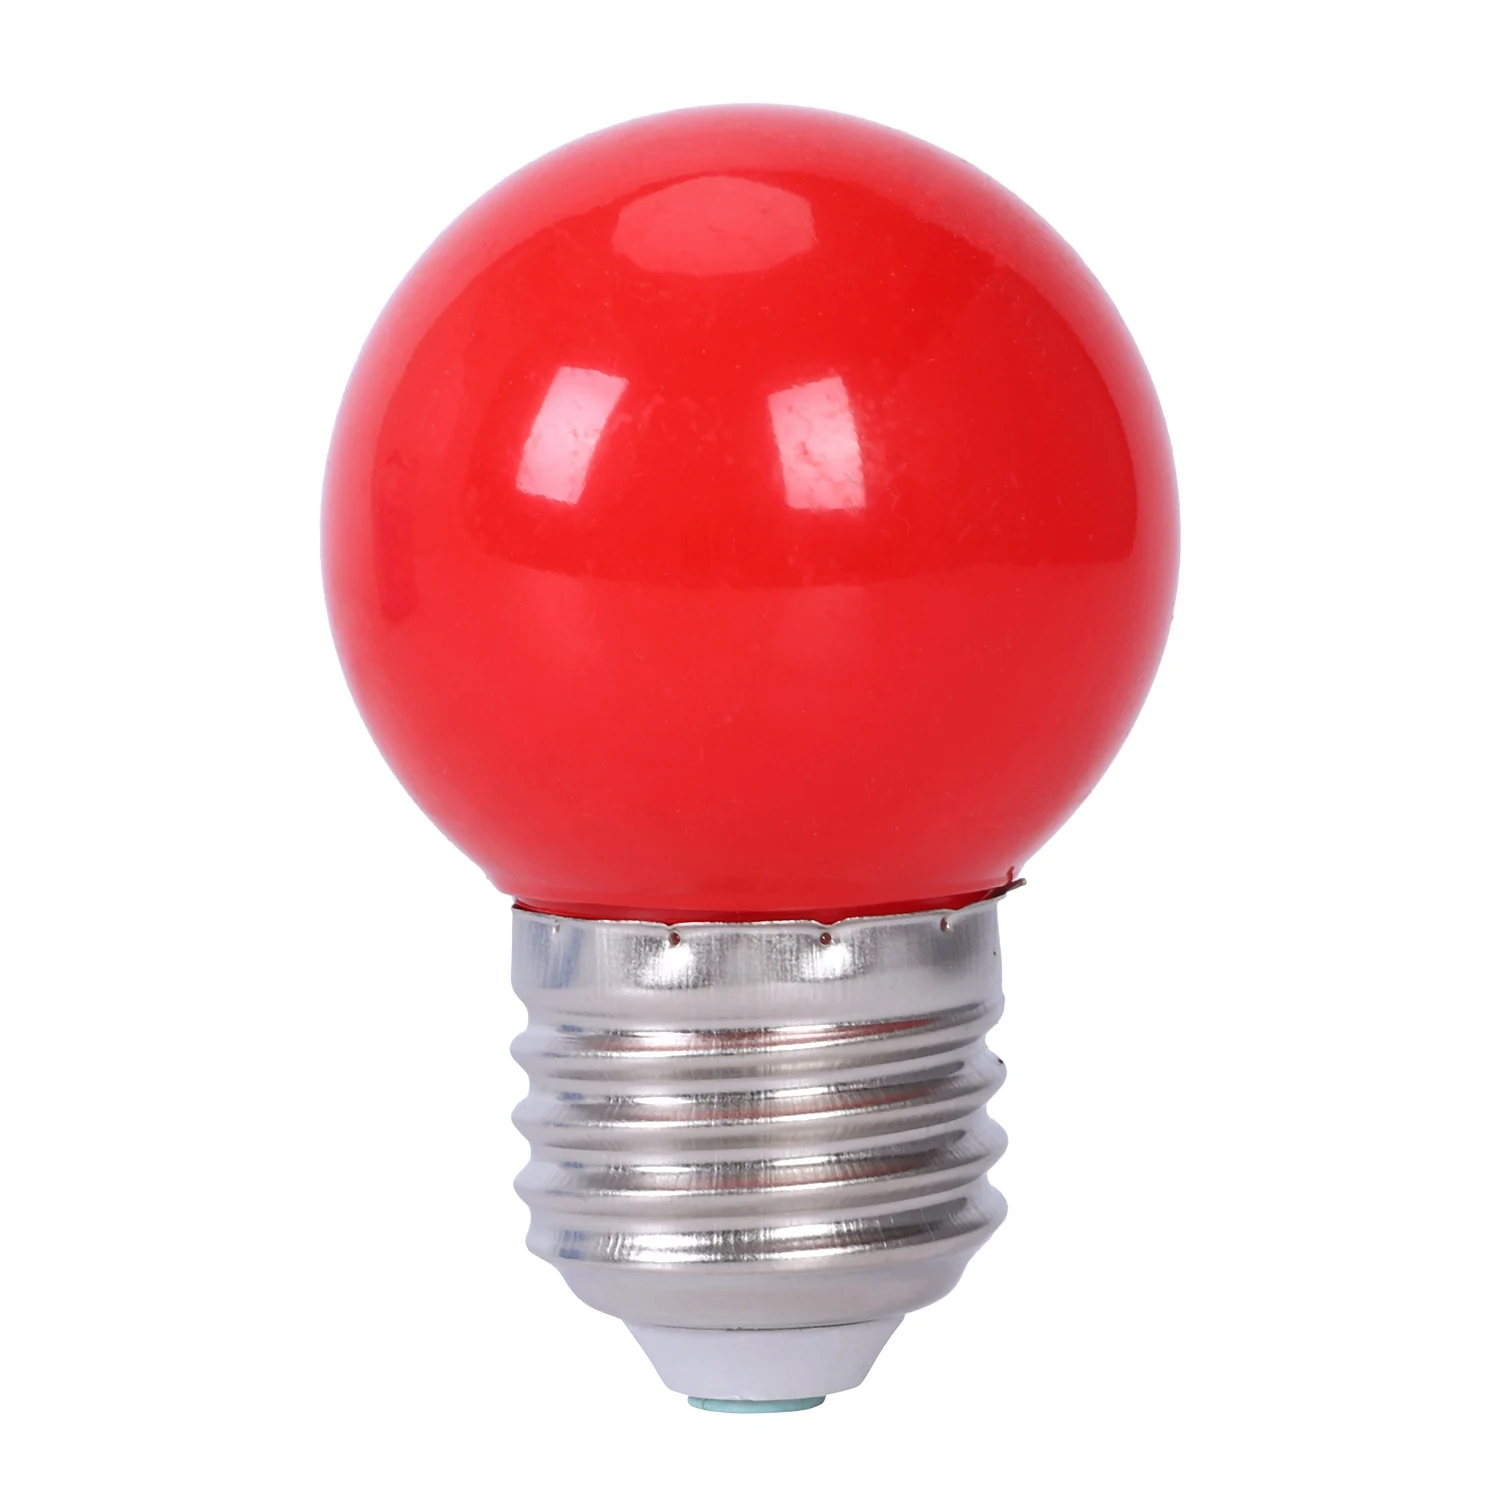 

E27 3W 6 SMD LED Energy Saving Globe Bulb Light Lamp AC 110-240V, Red